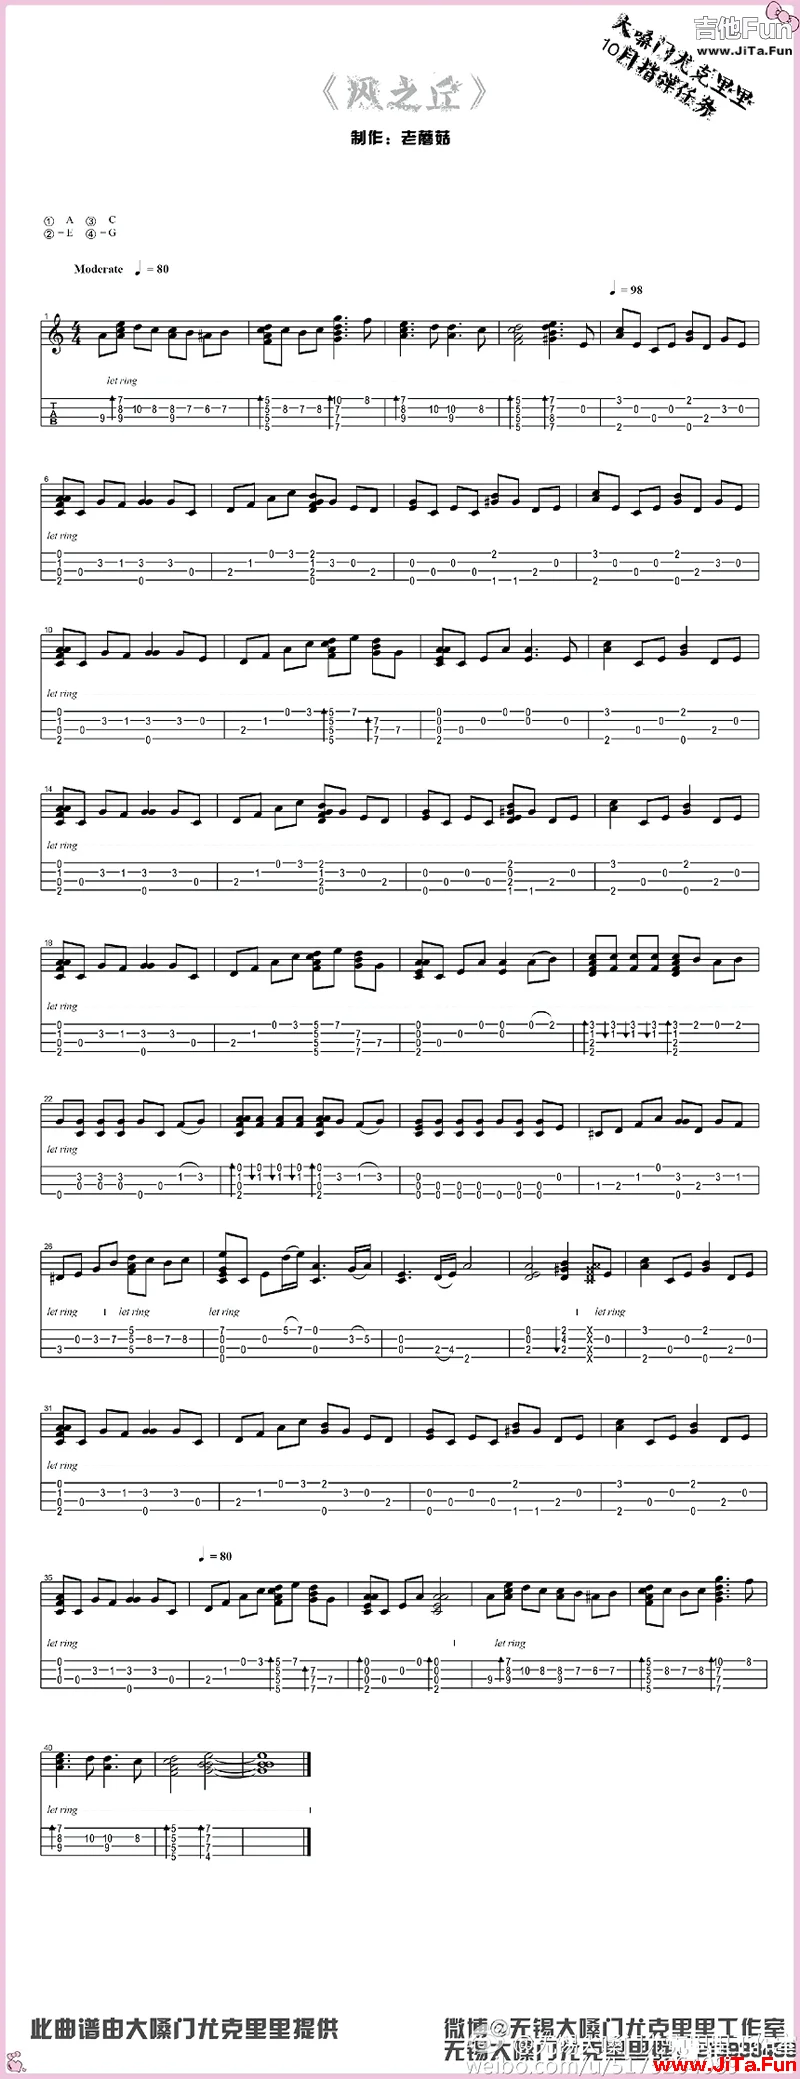 風之丘-ukulele指彈譜